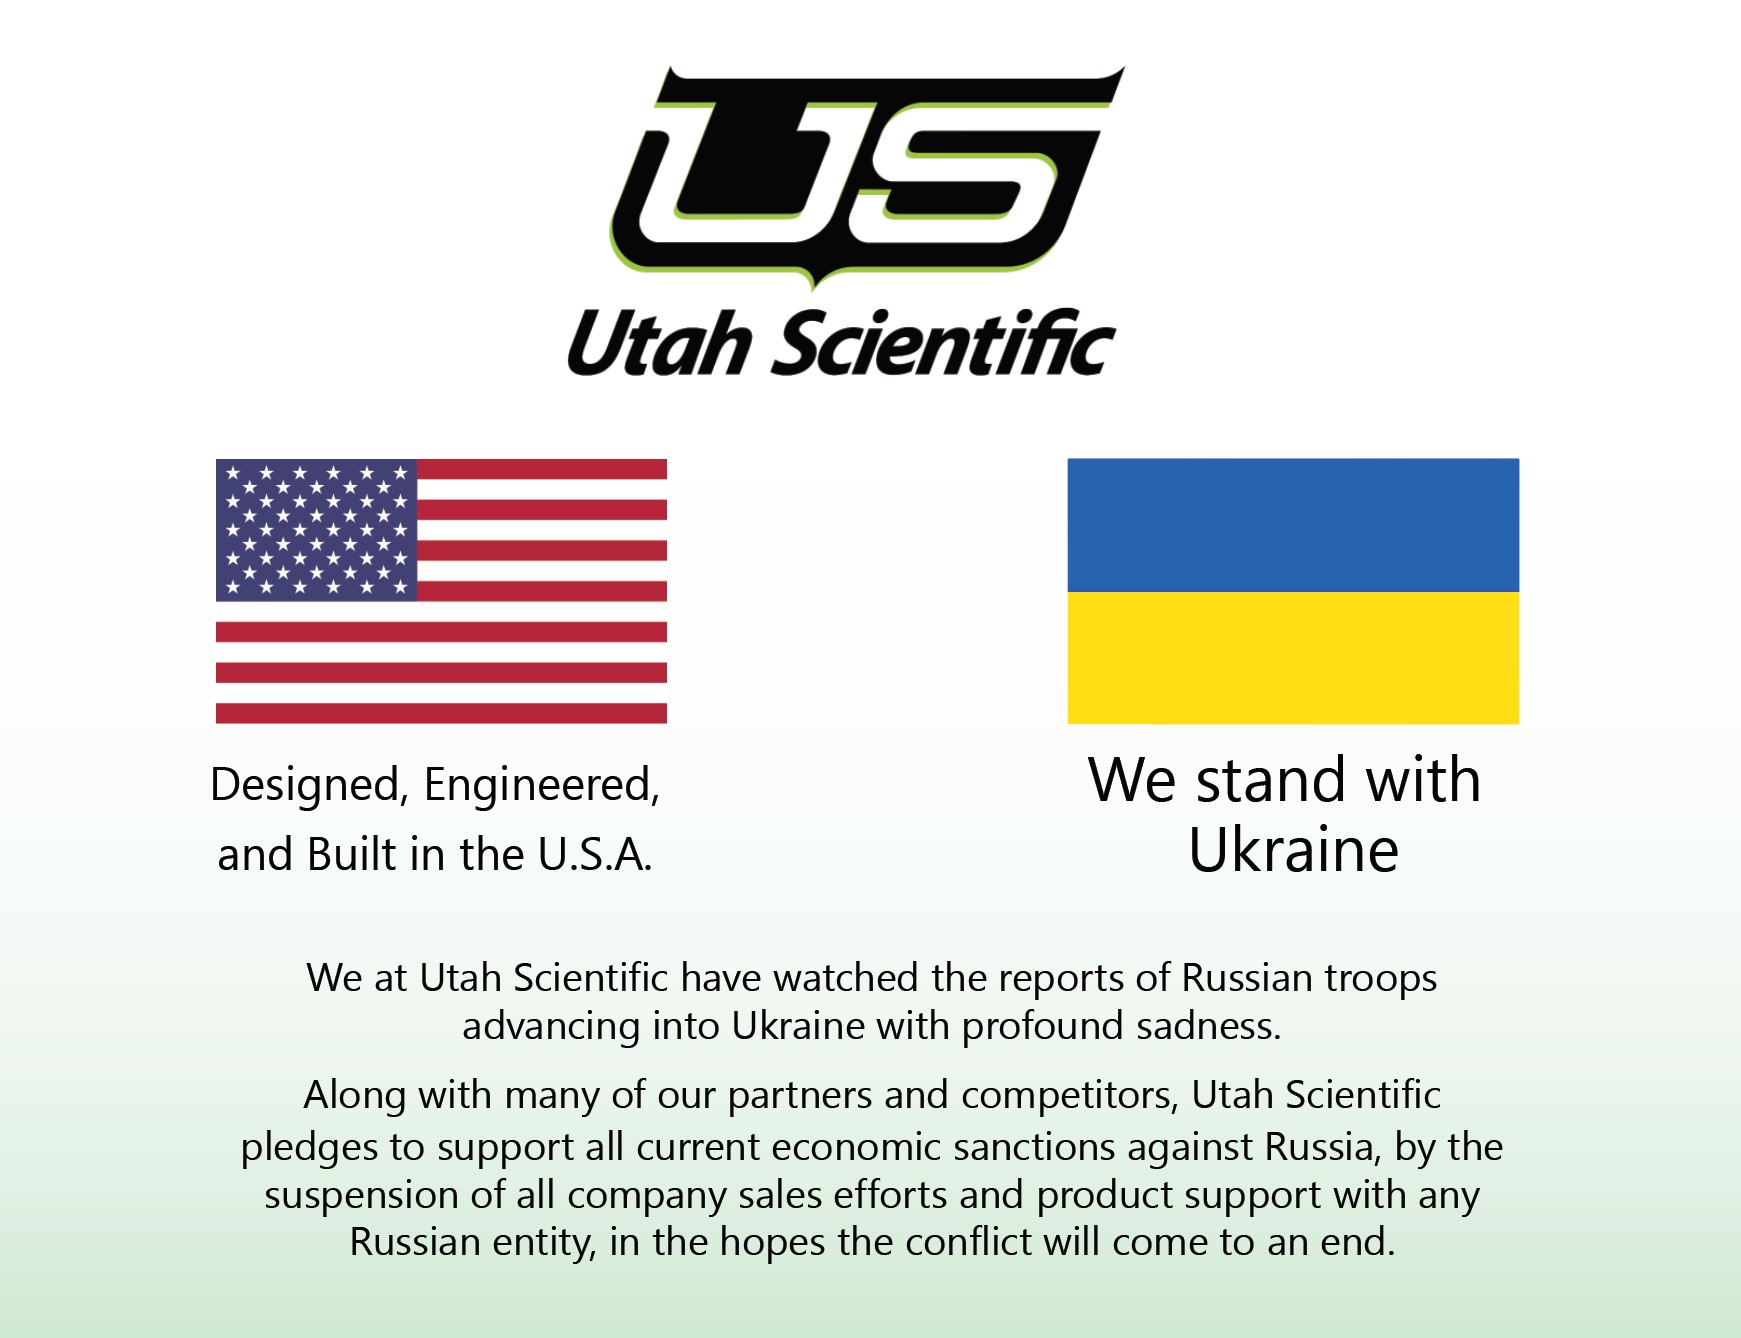 Utah Scientific stands with the people of Ukraine.